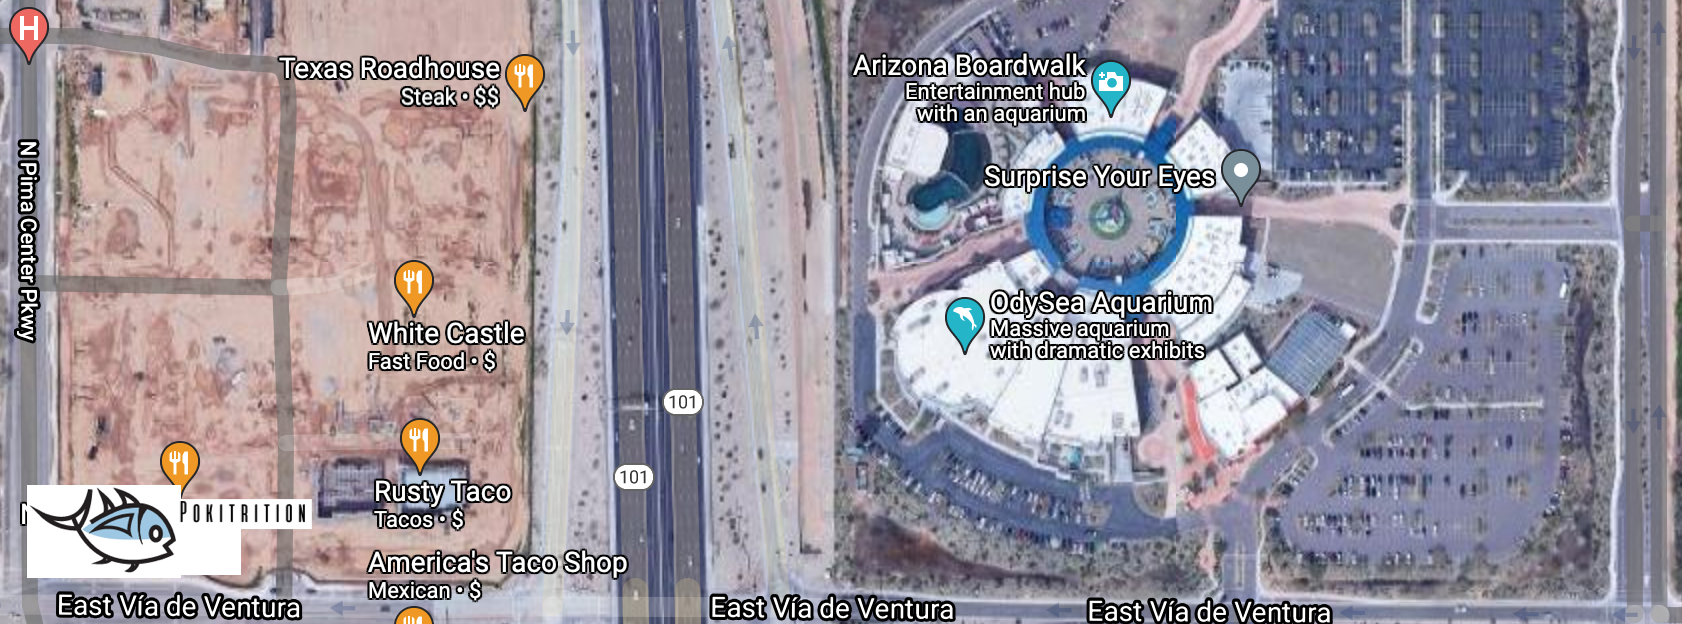 Pokitrition location at Scottsdale in Map. Near White Castle and OdySea Aquarium